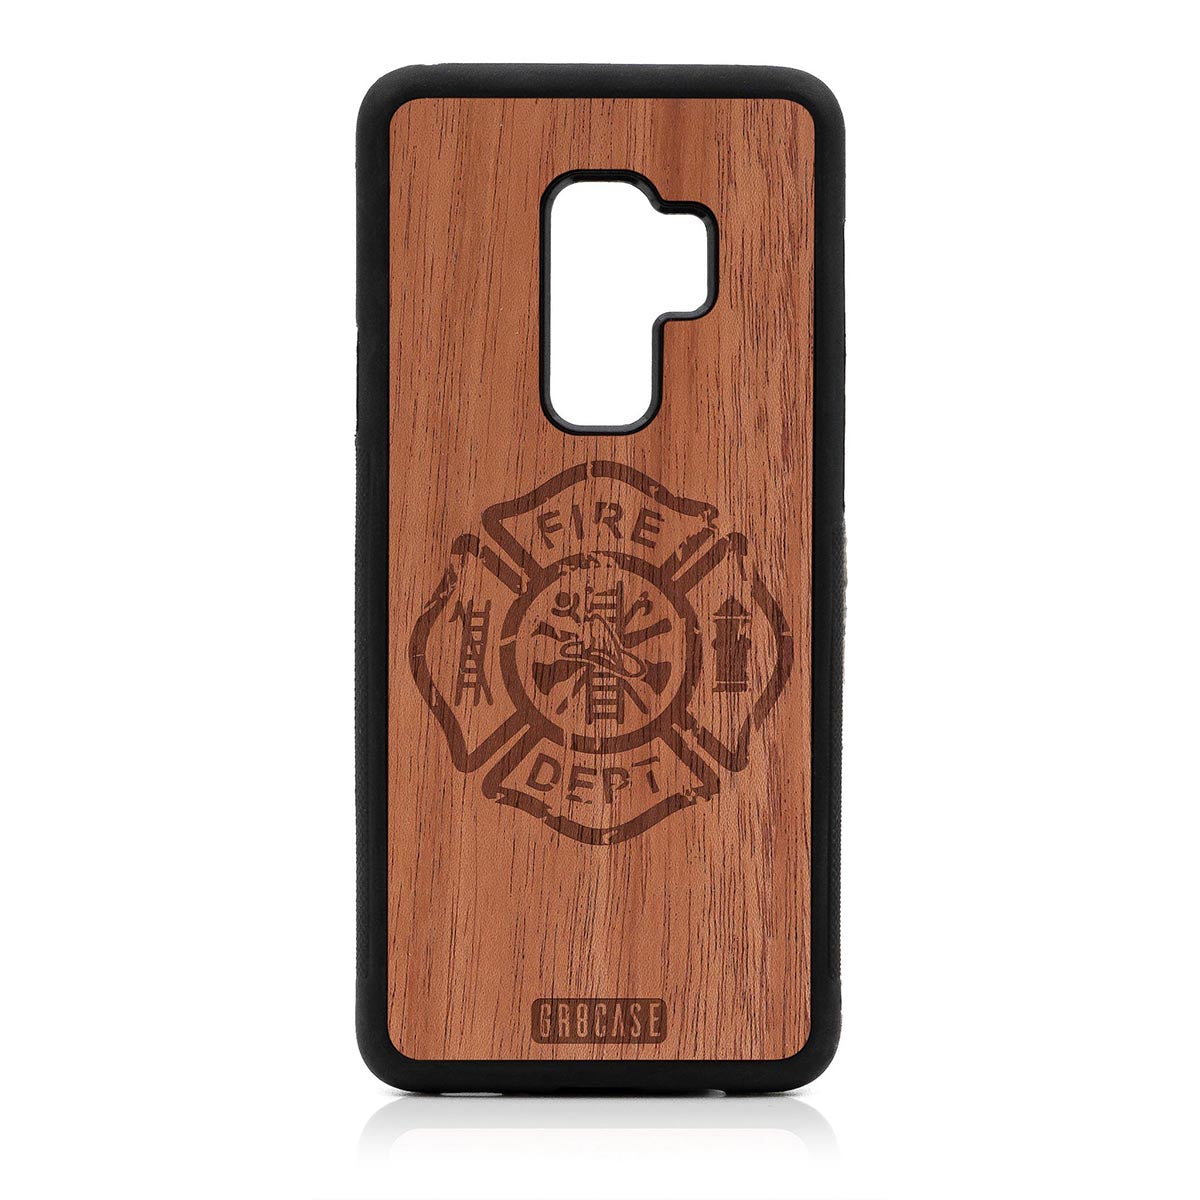 Fire Department Design Wood Case Samsung Galaxy S9 Plus by GR8CASE